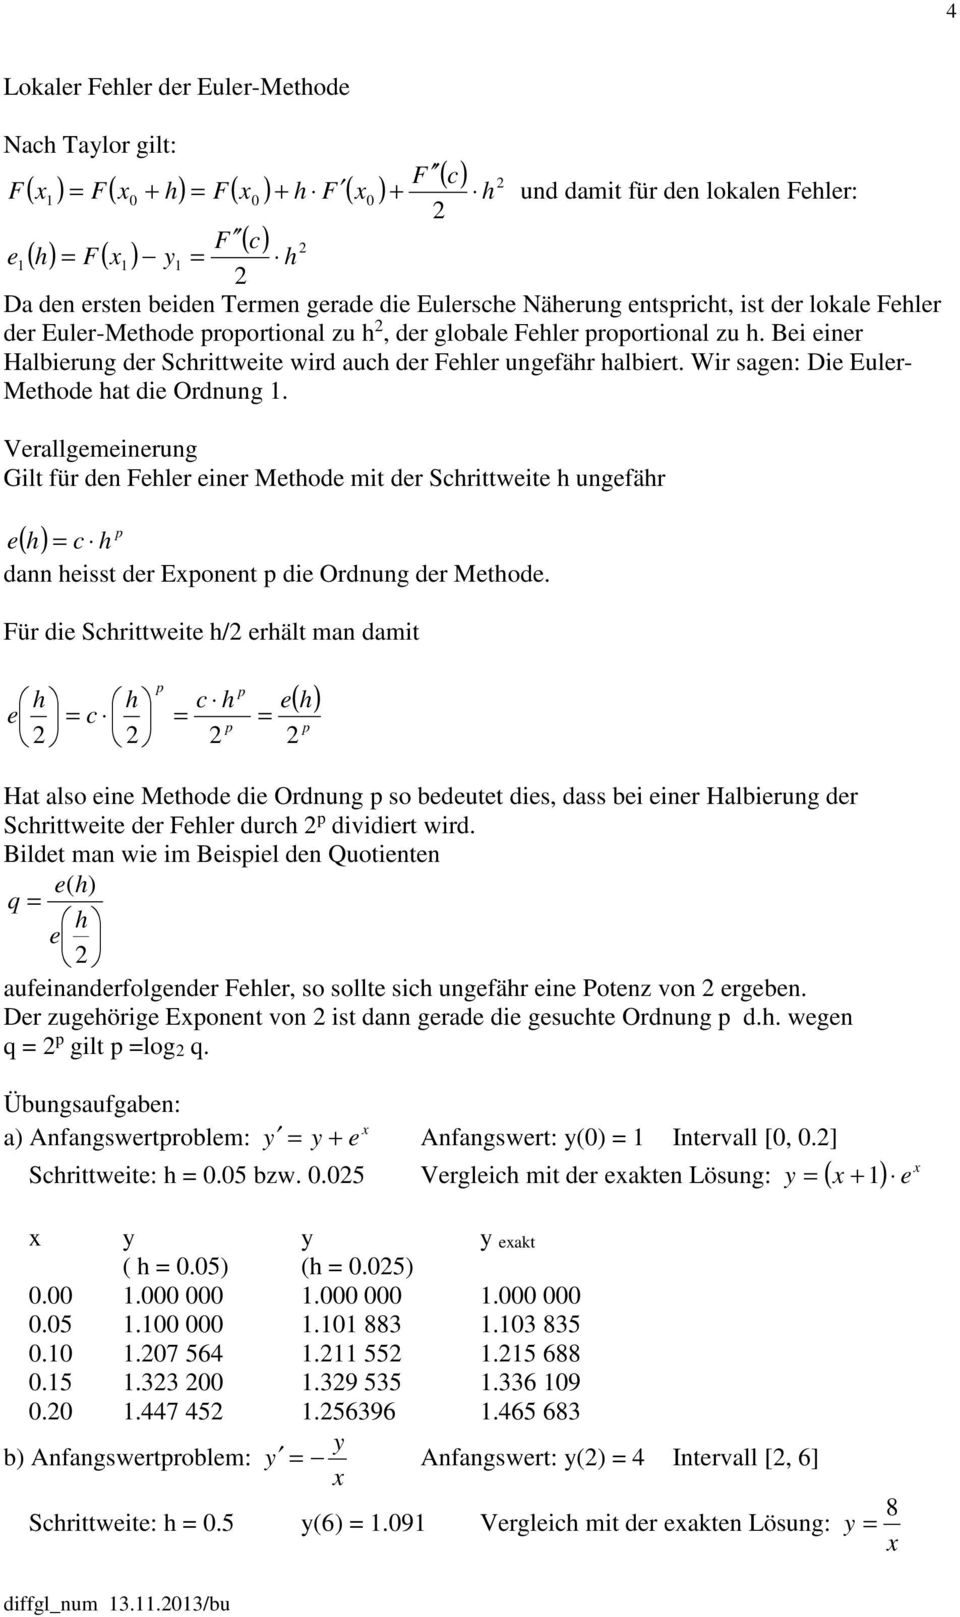 Wr sagen: De Euler- Metode at de Ordnung. Verallgemenerung Glt für den Feler ener Metode mt der Scrttwete ungefär p ( ) = c e dann esst der Eponent p de Ordnung der Metode.